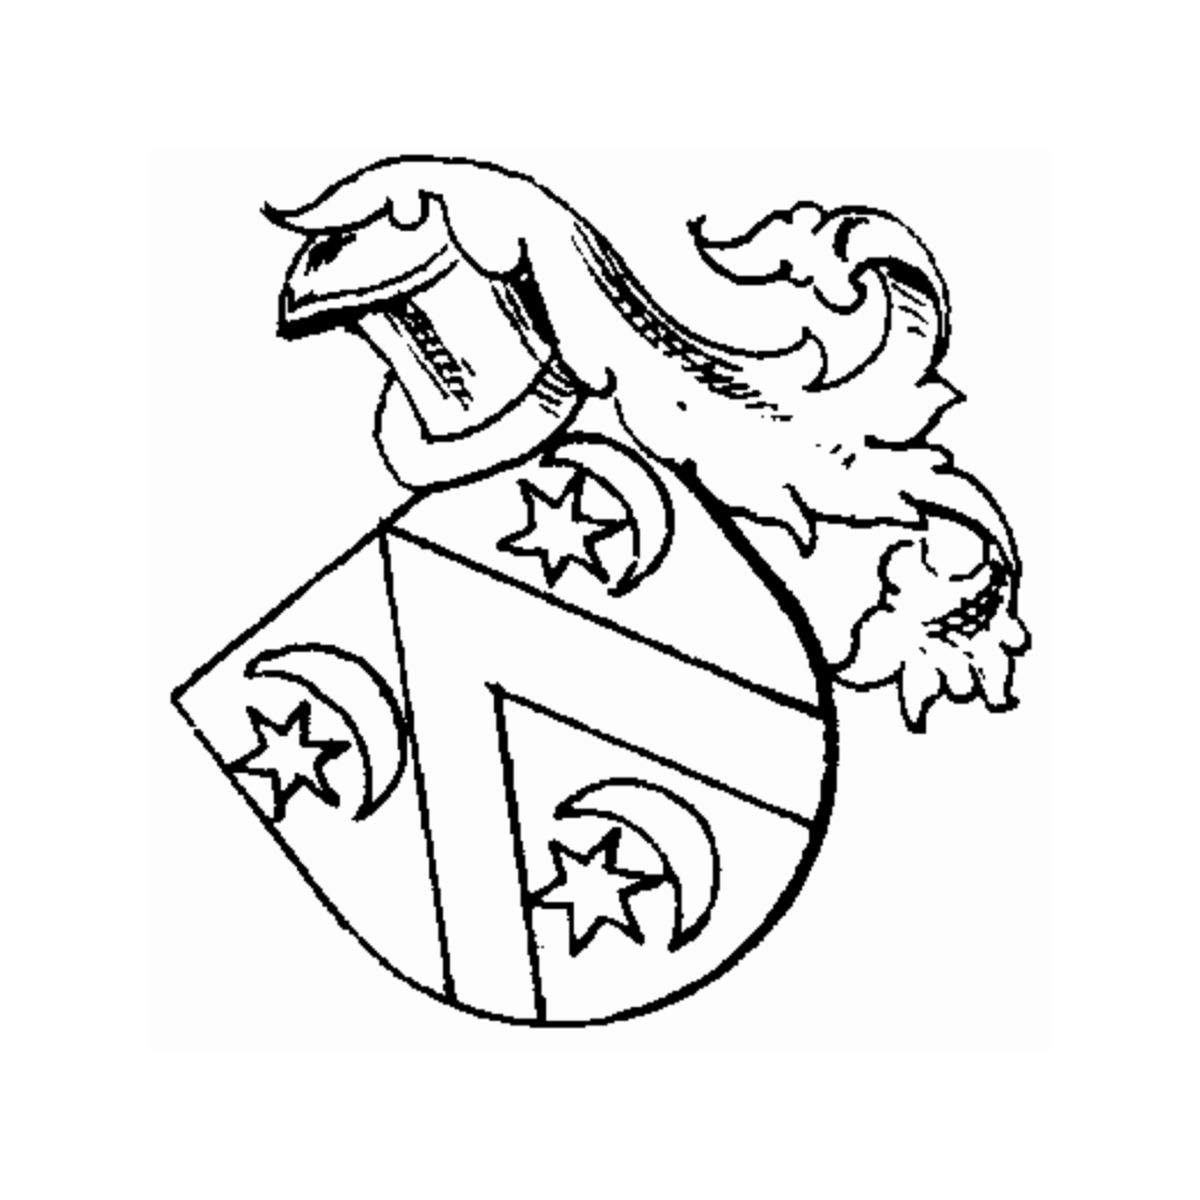 Coat of arms of family Segaler